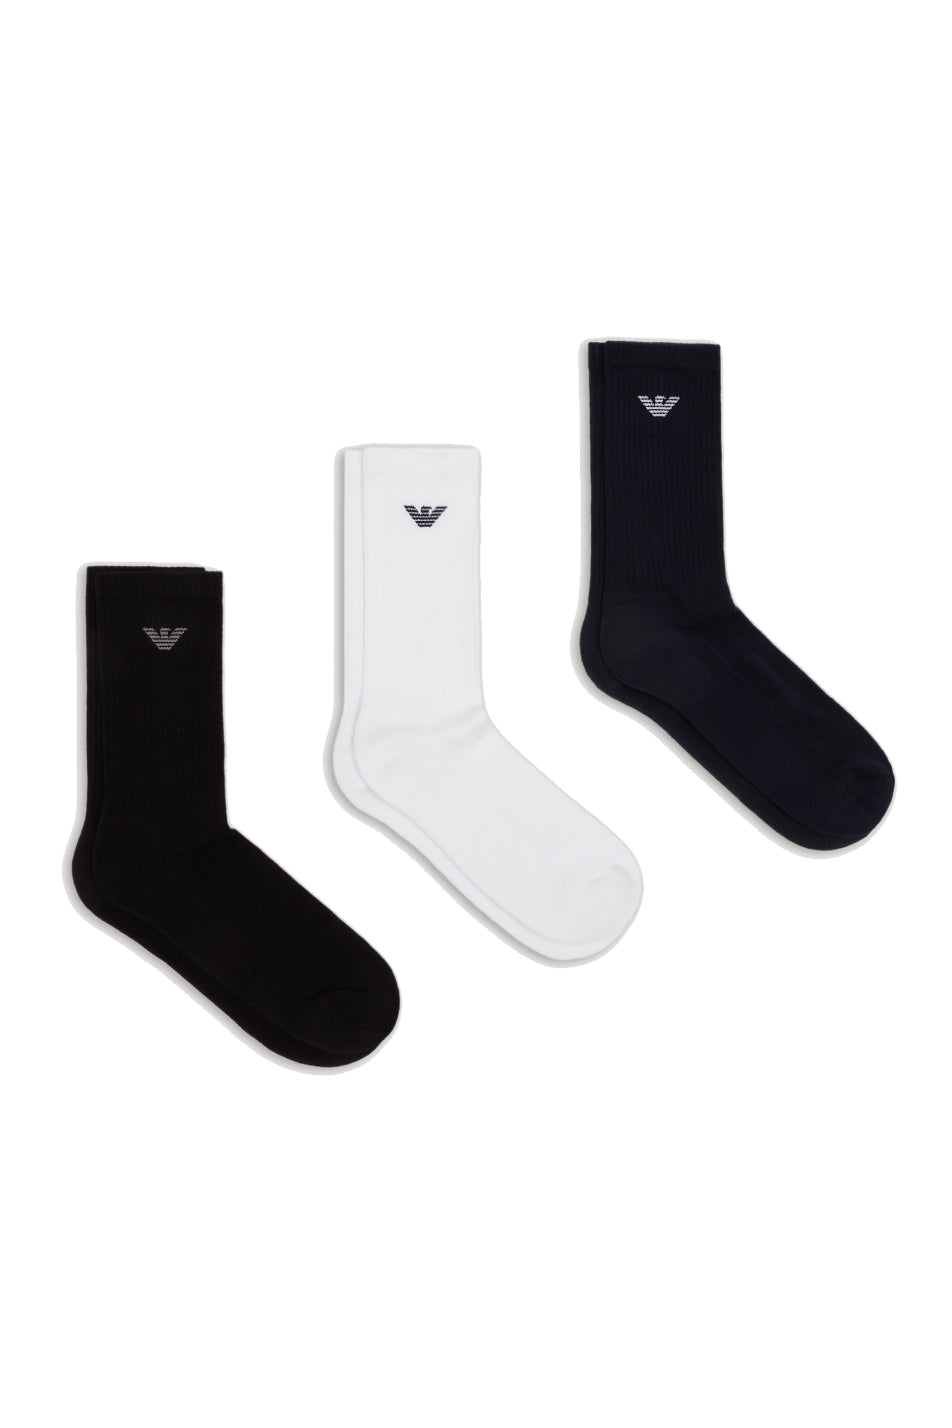 Emporio Armani Men's 3 Pack Knit Sock — Pants & Socks